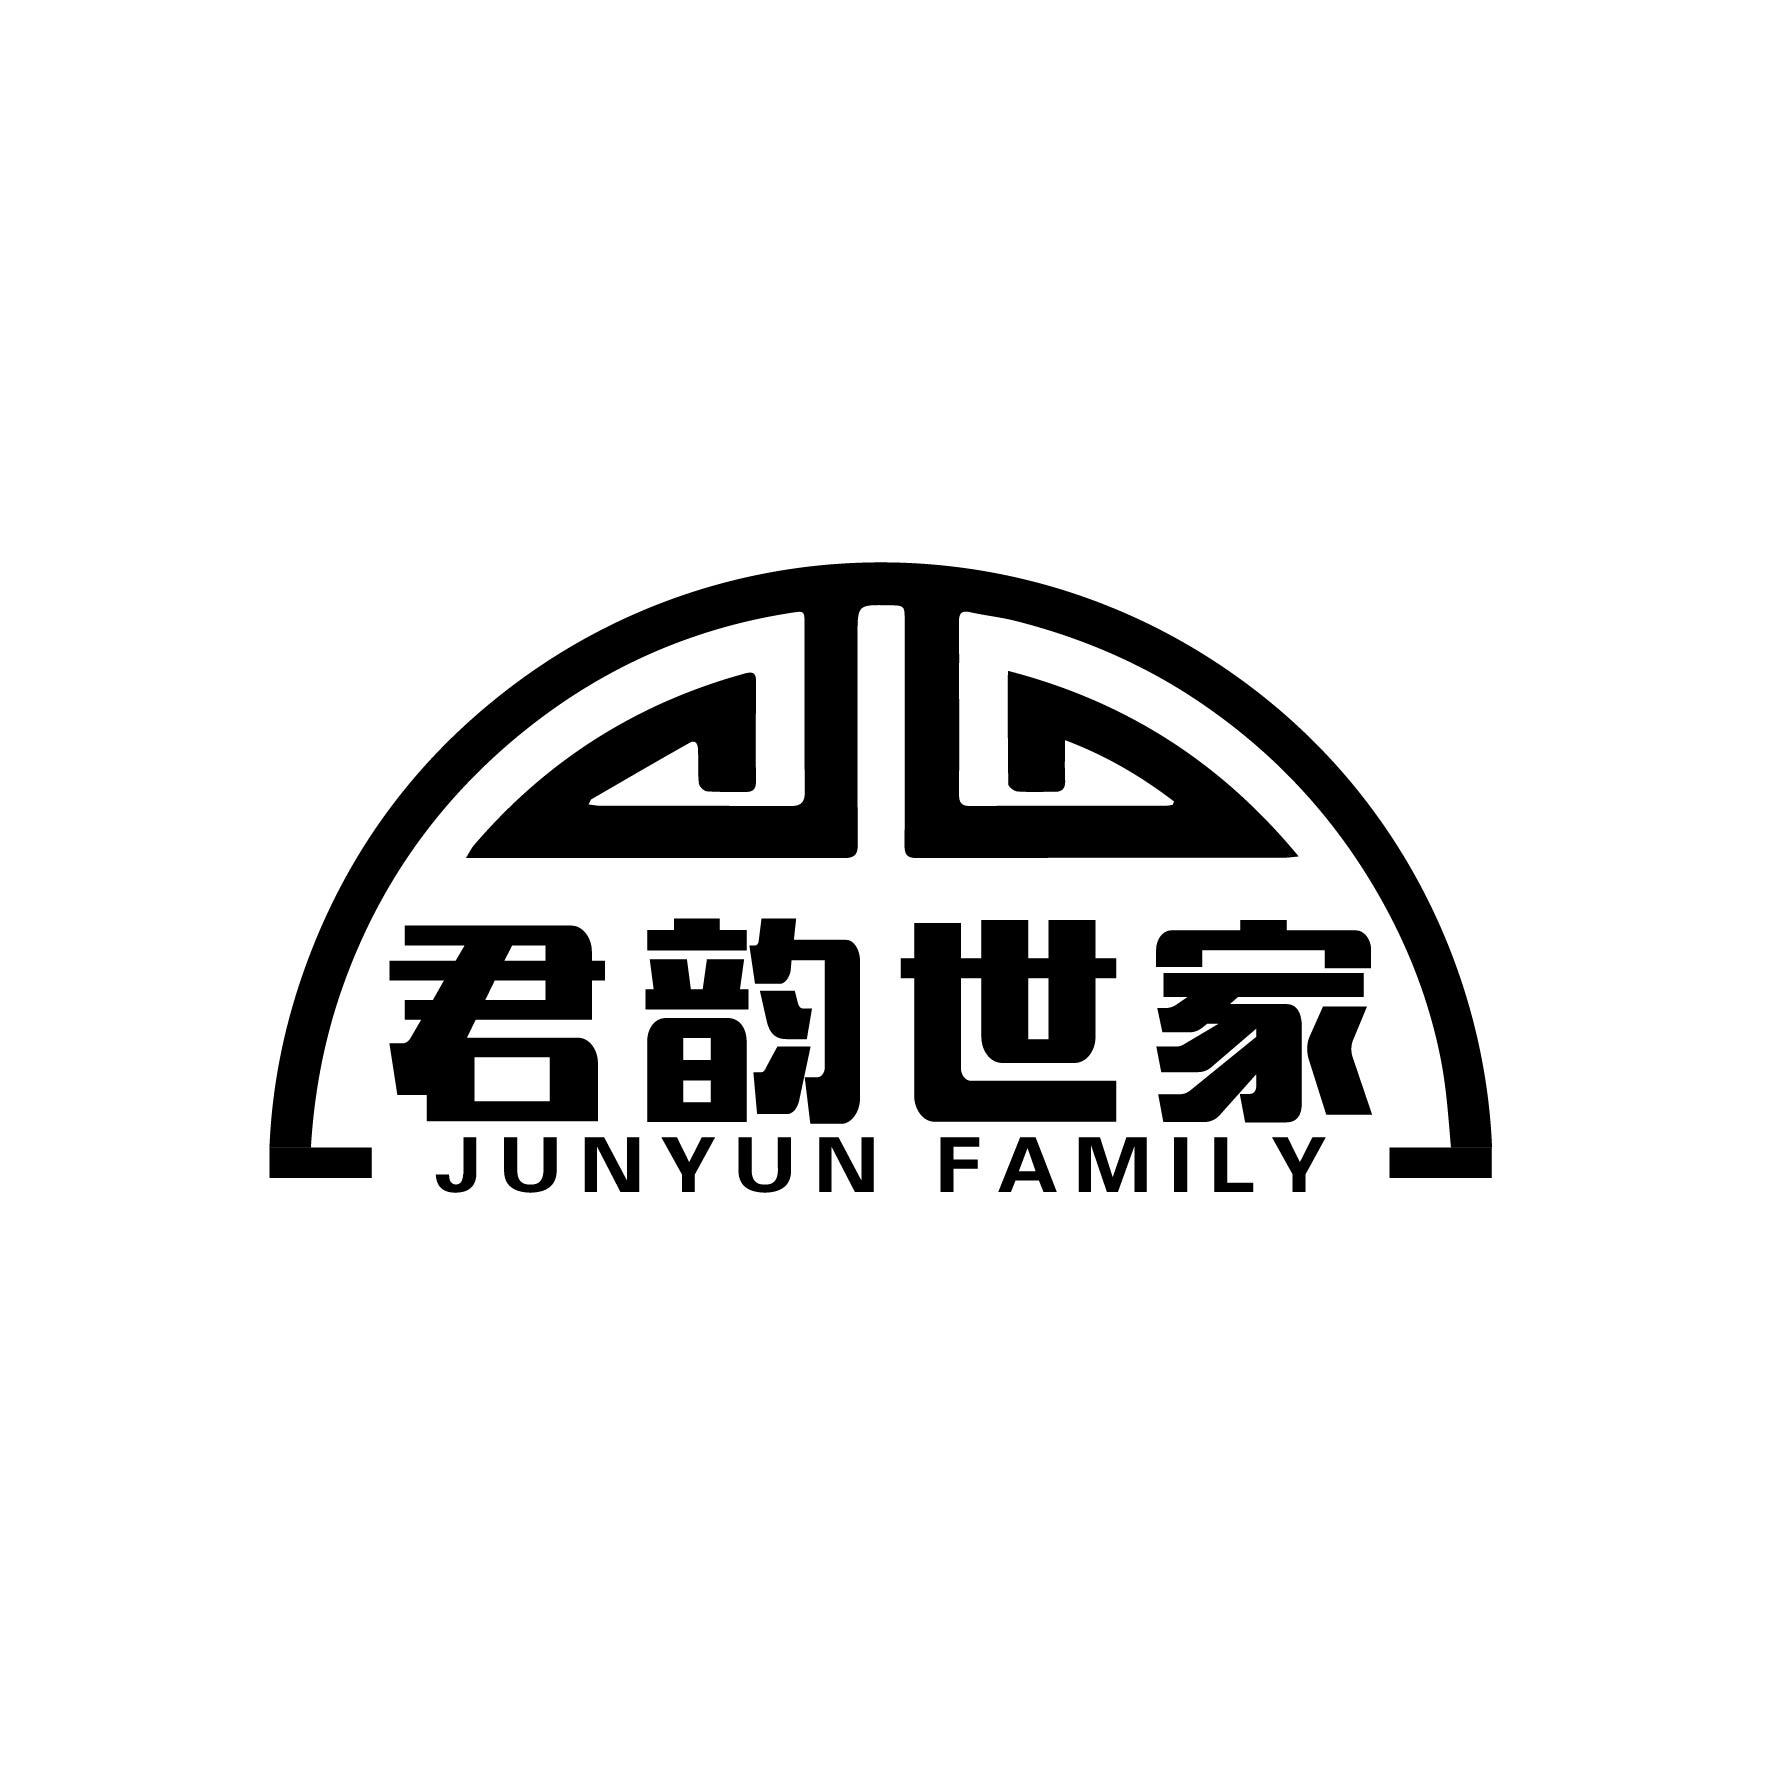   JUNYUN FAMILY